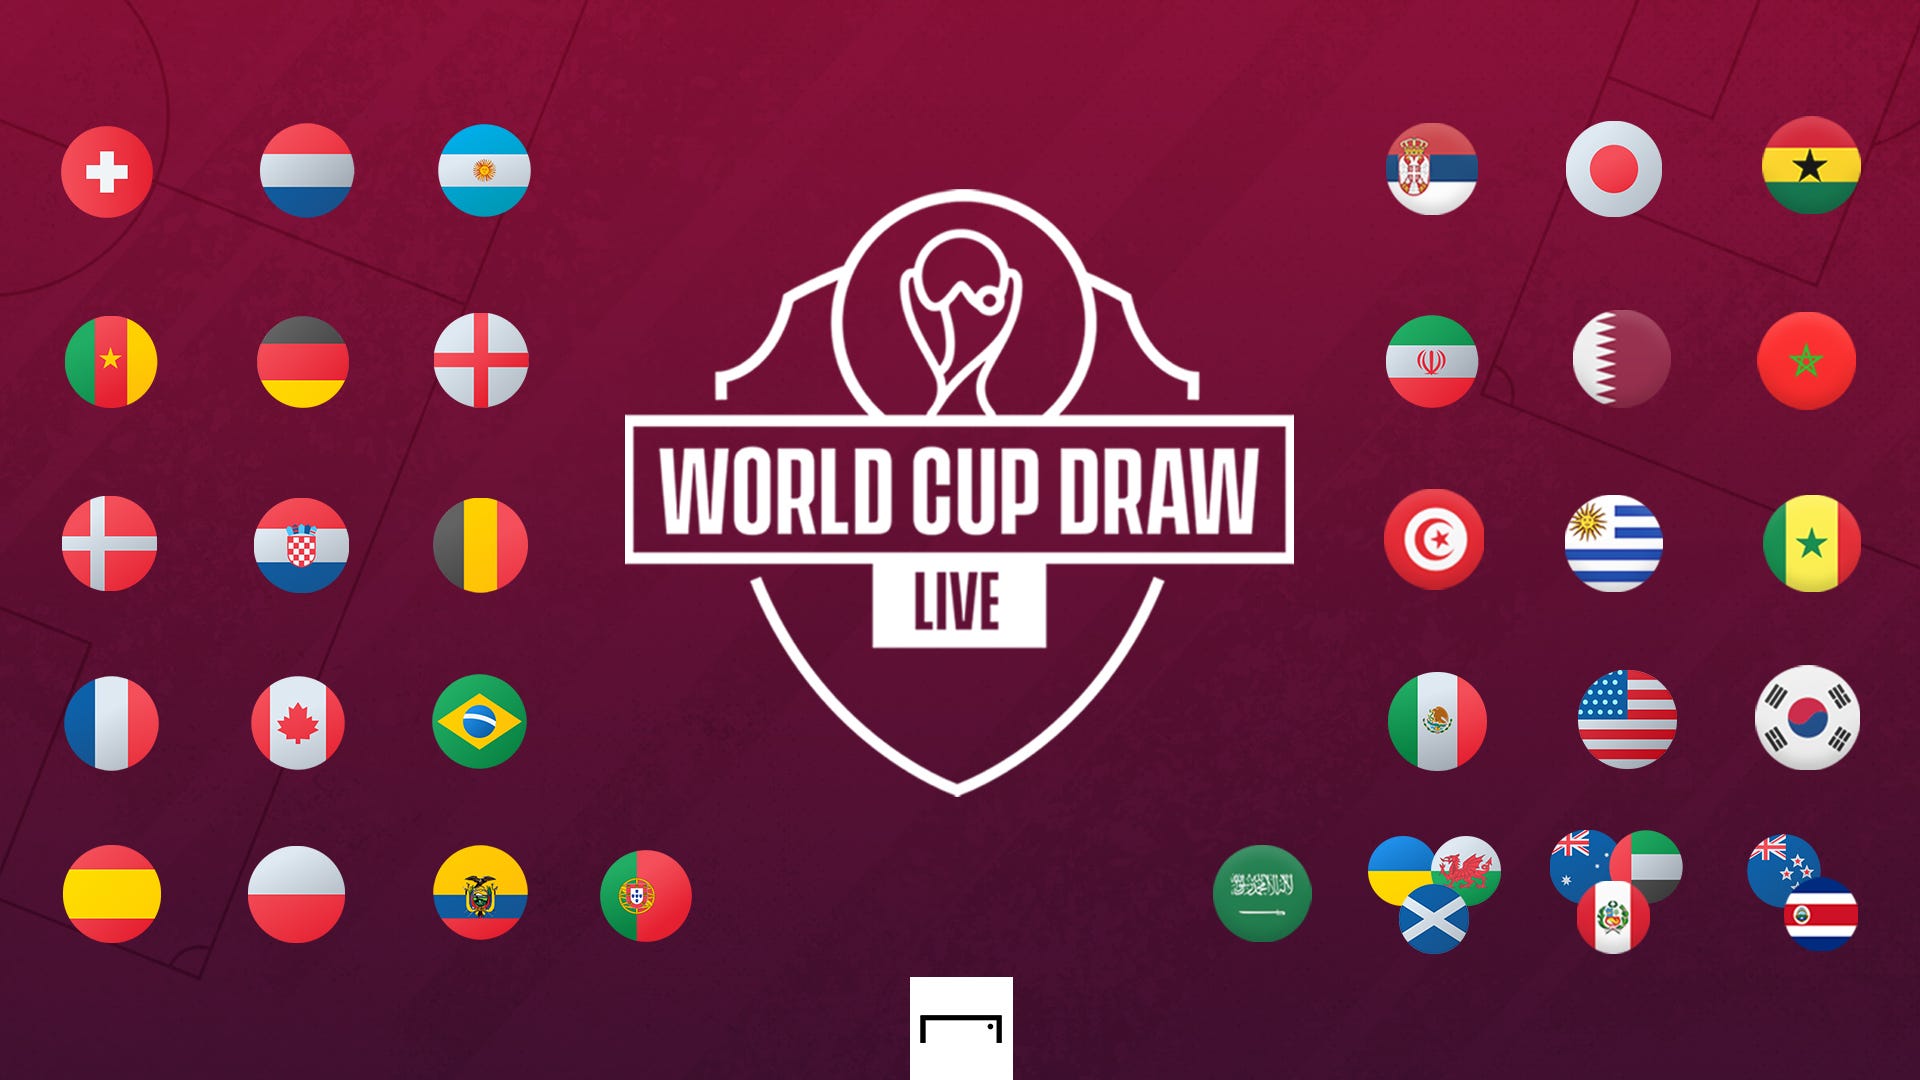 2022 FIFA Club World Cup: Official draw unveiled - Doha News | Qatar